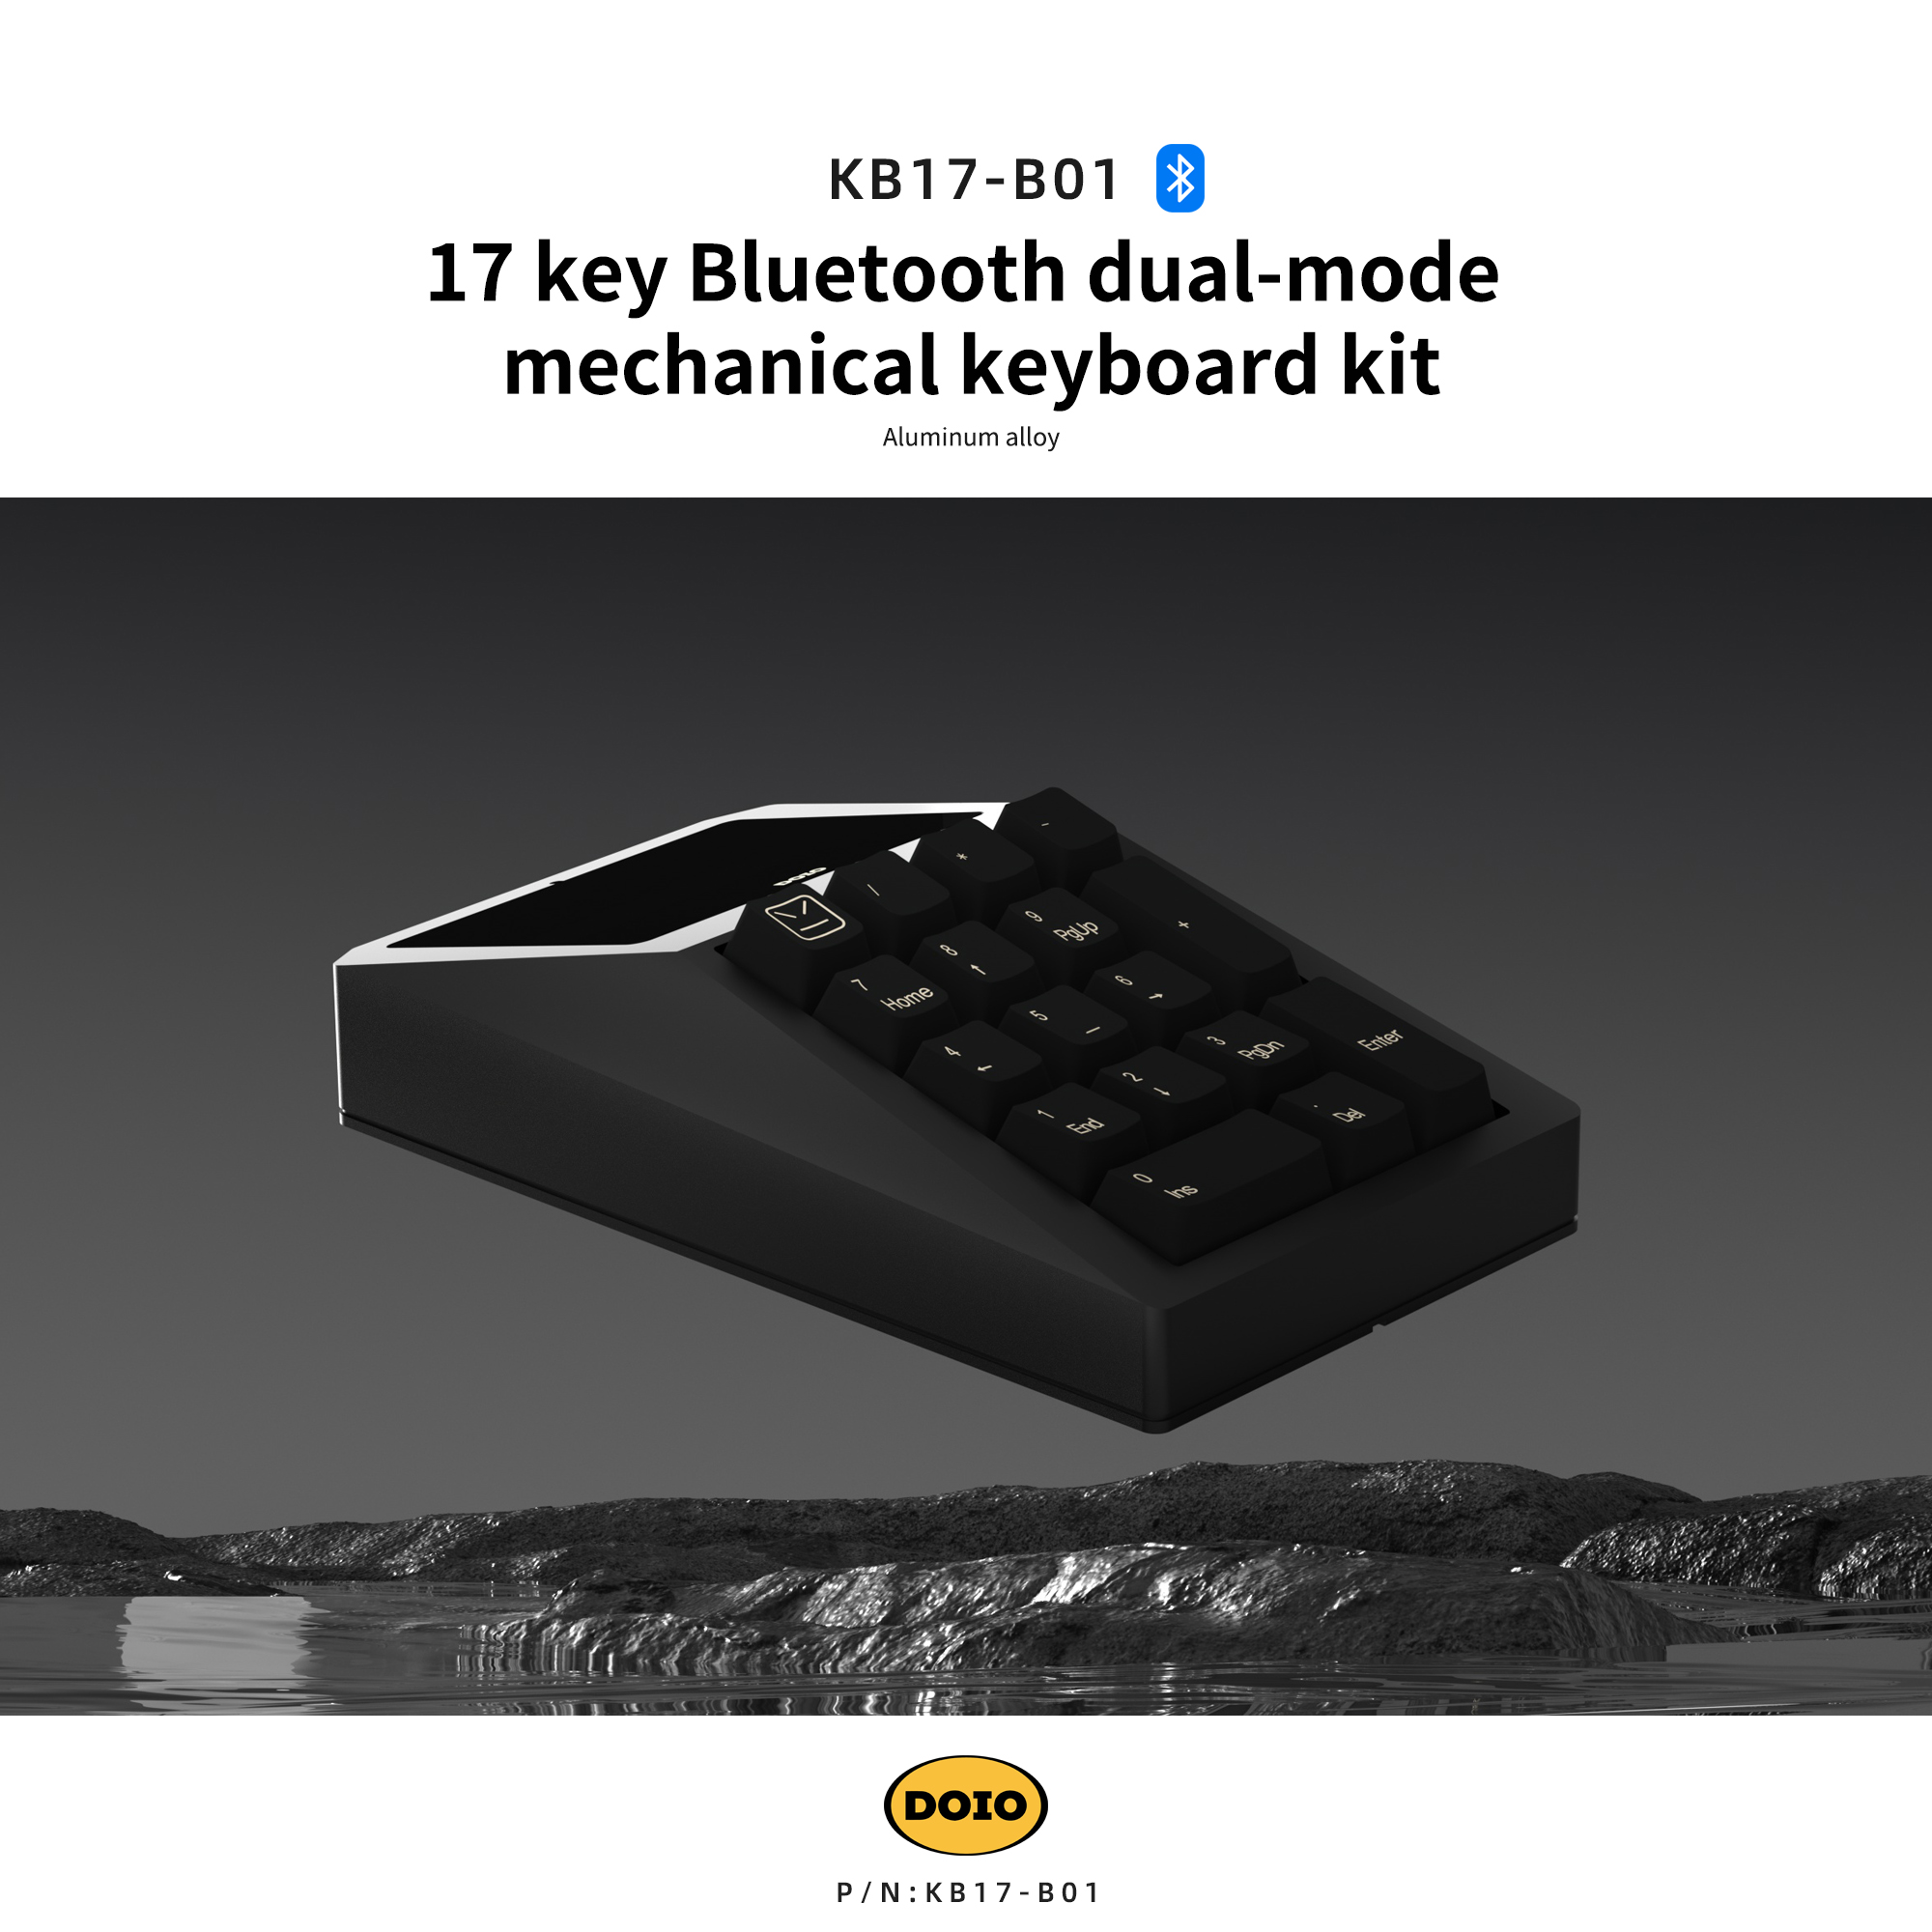 17 key Bluetooth dual-mode mechanical keyboard kit